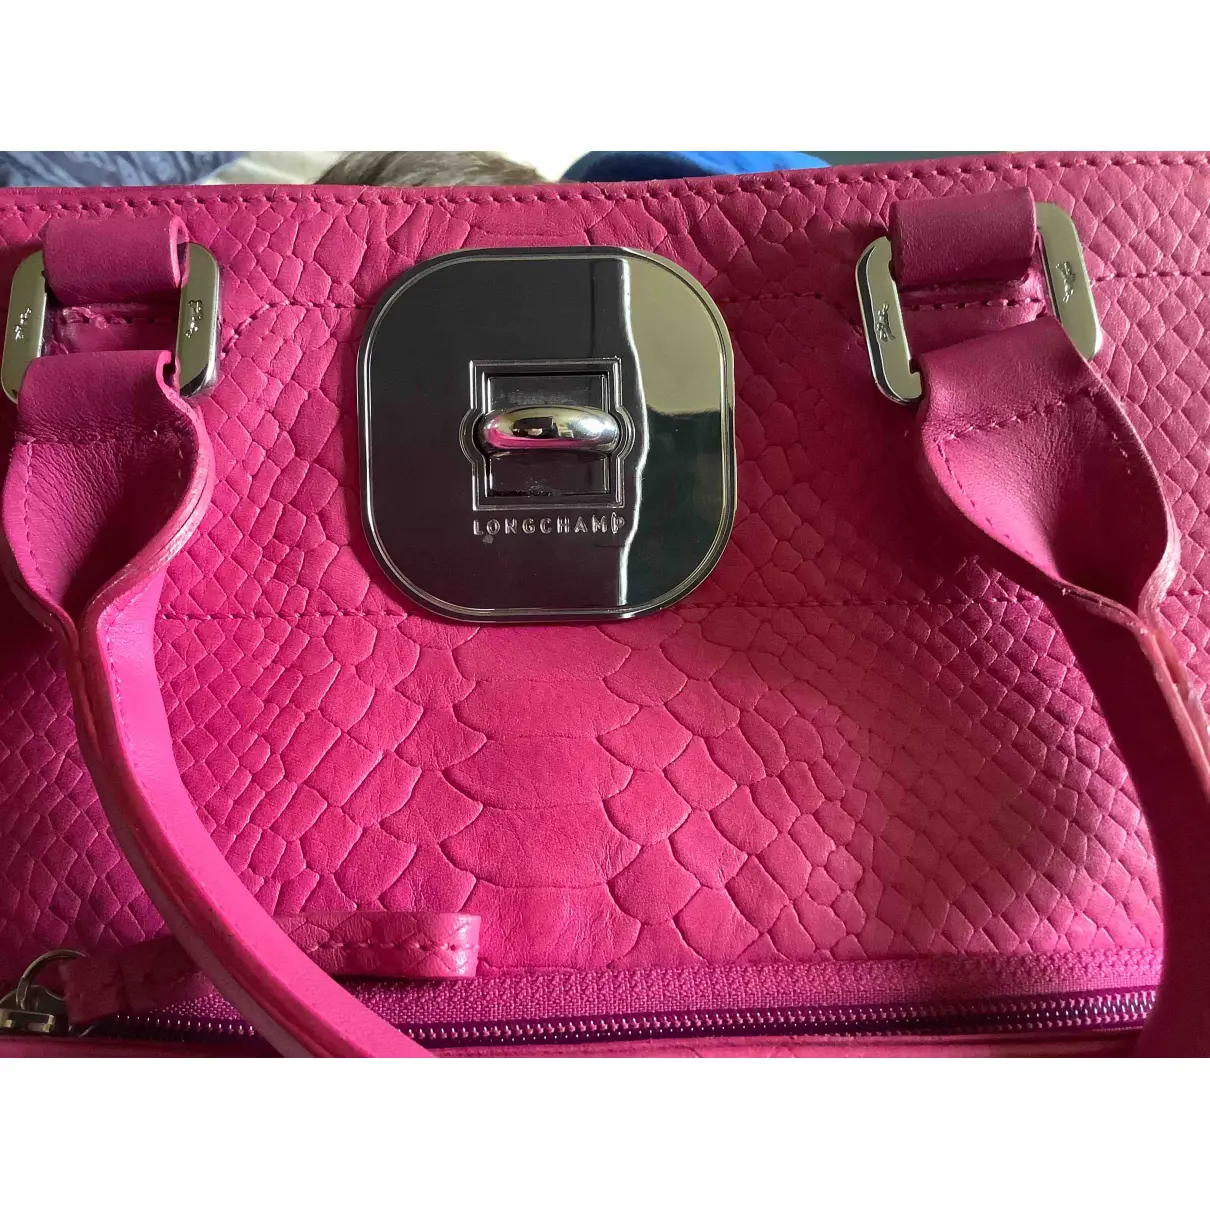 Buy Longchamp Gatsby leather handbag online